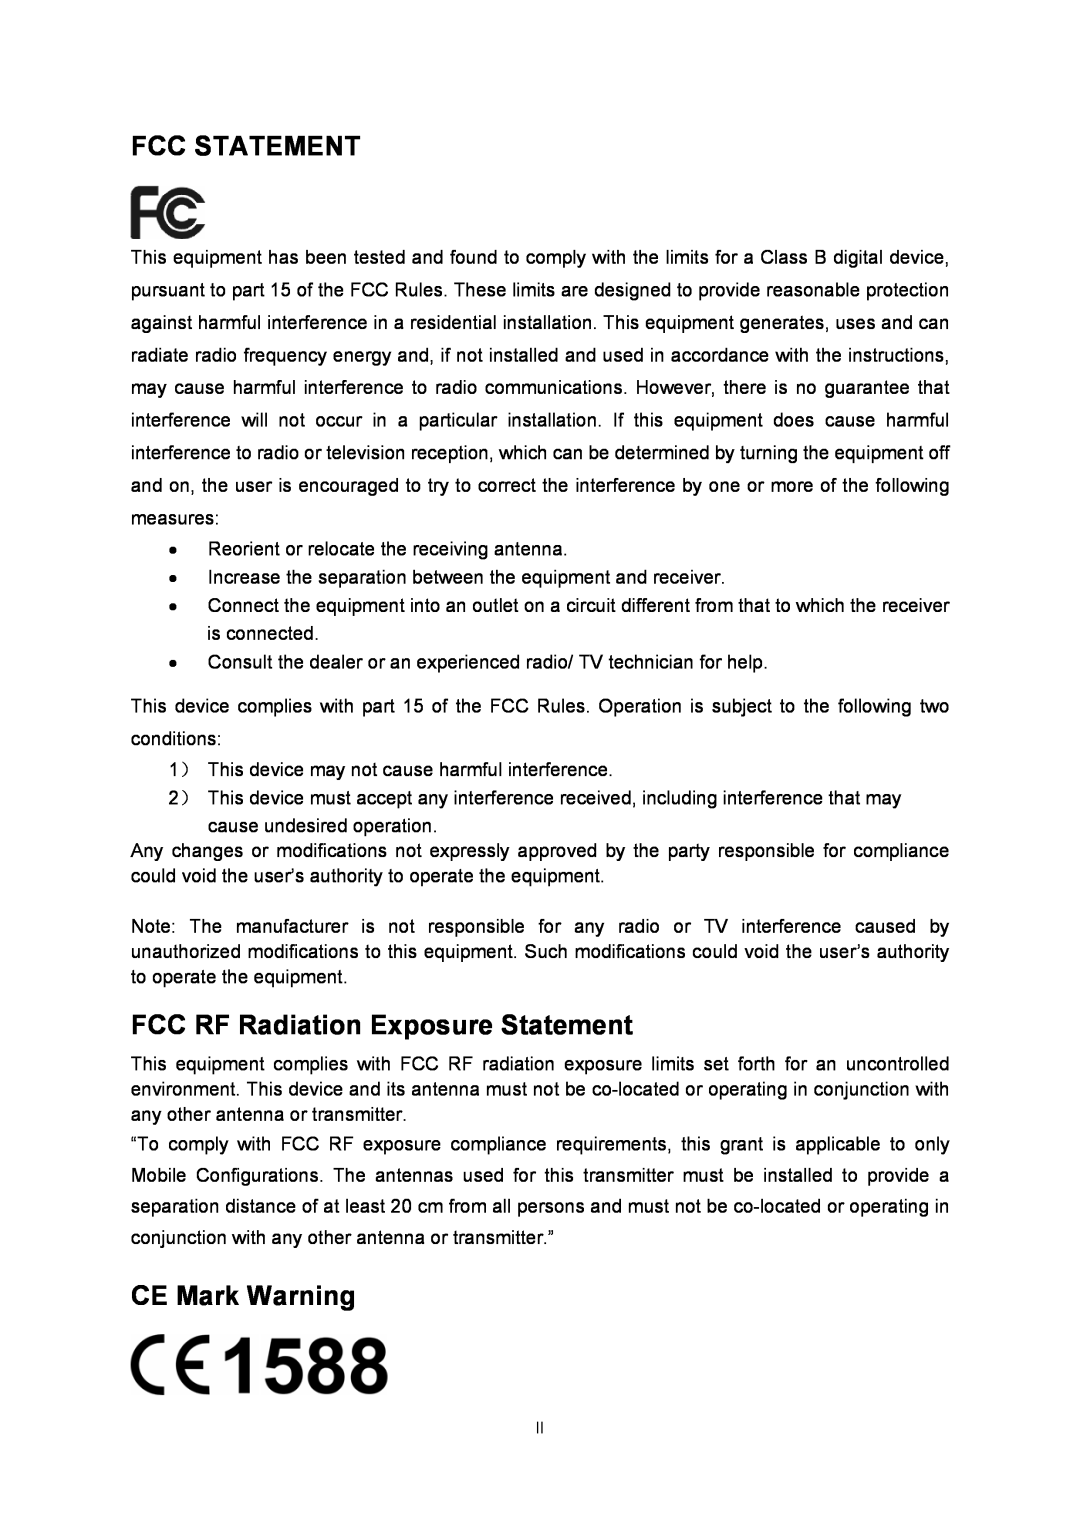 TP-Link TD-W8901N manual Fcc Statement, FCC RF Radiation Exposure Statement, CE Mark Warning 